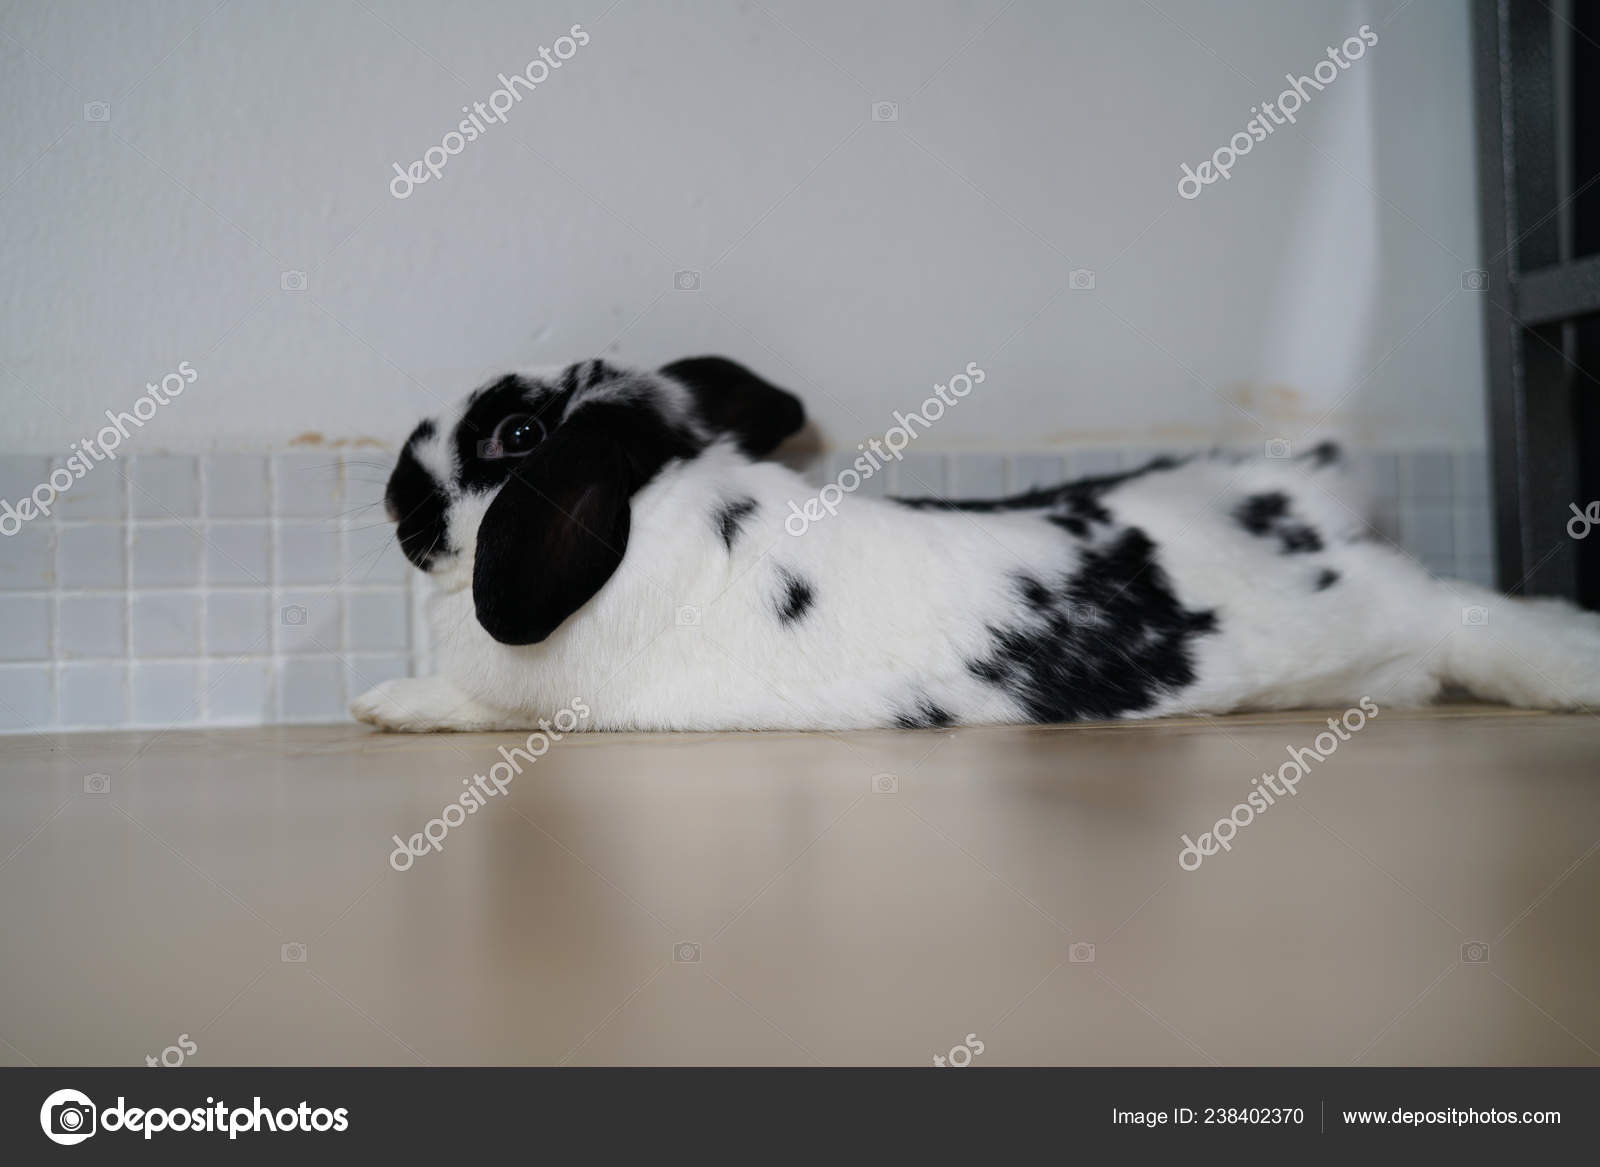 Holland Lop Rabbit Bunny Black White Color Action Looking Camera Stock Photo C Alicebuddy 238402370